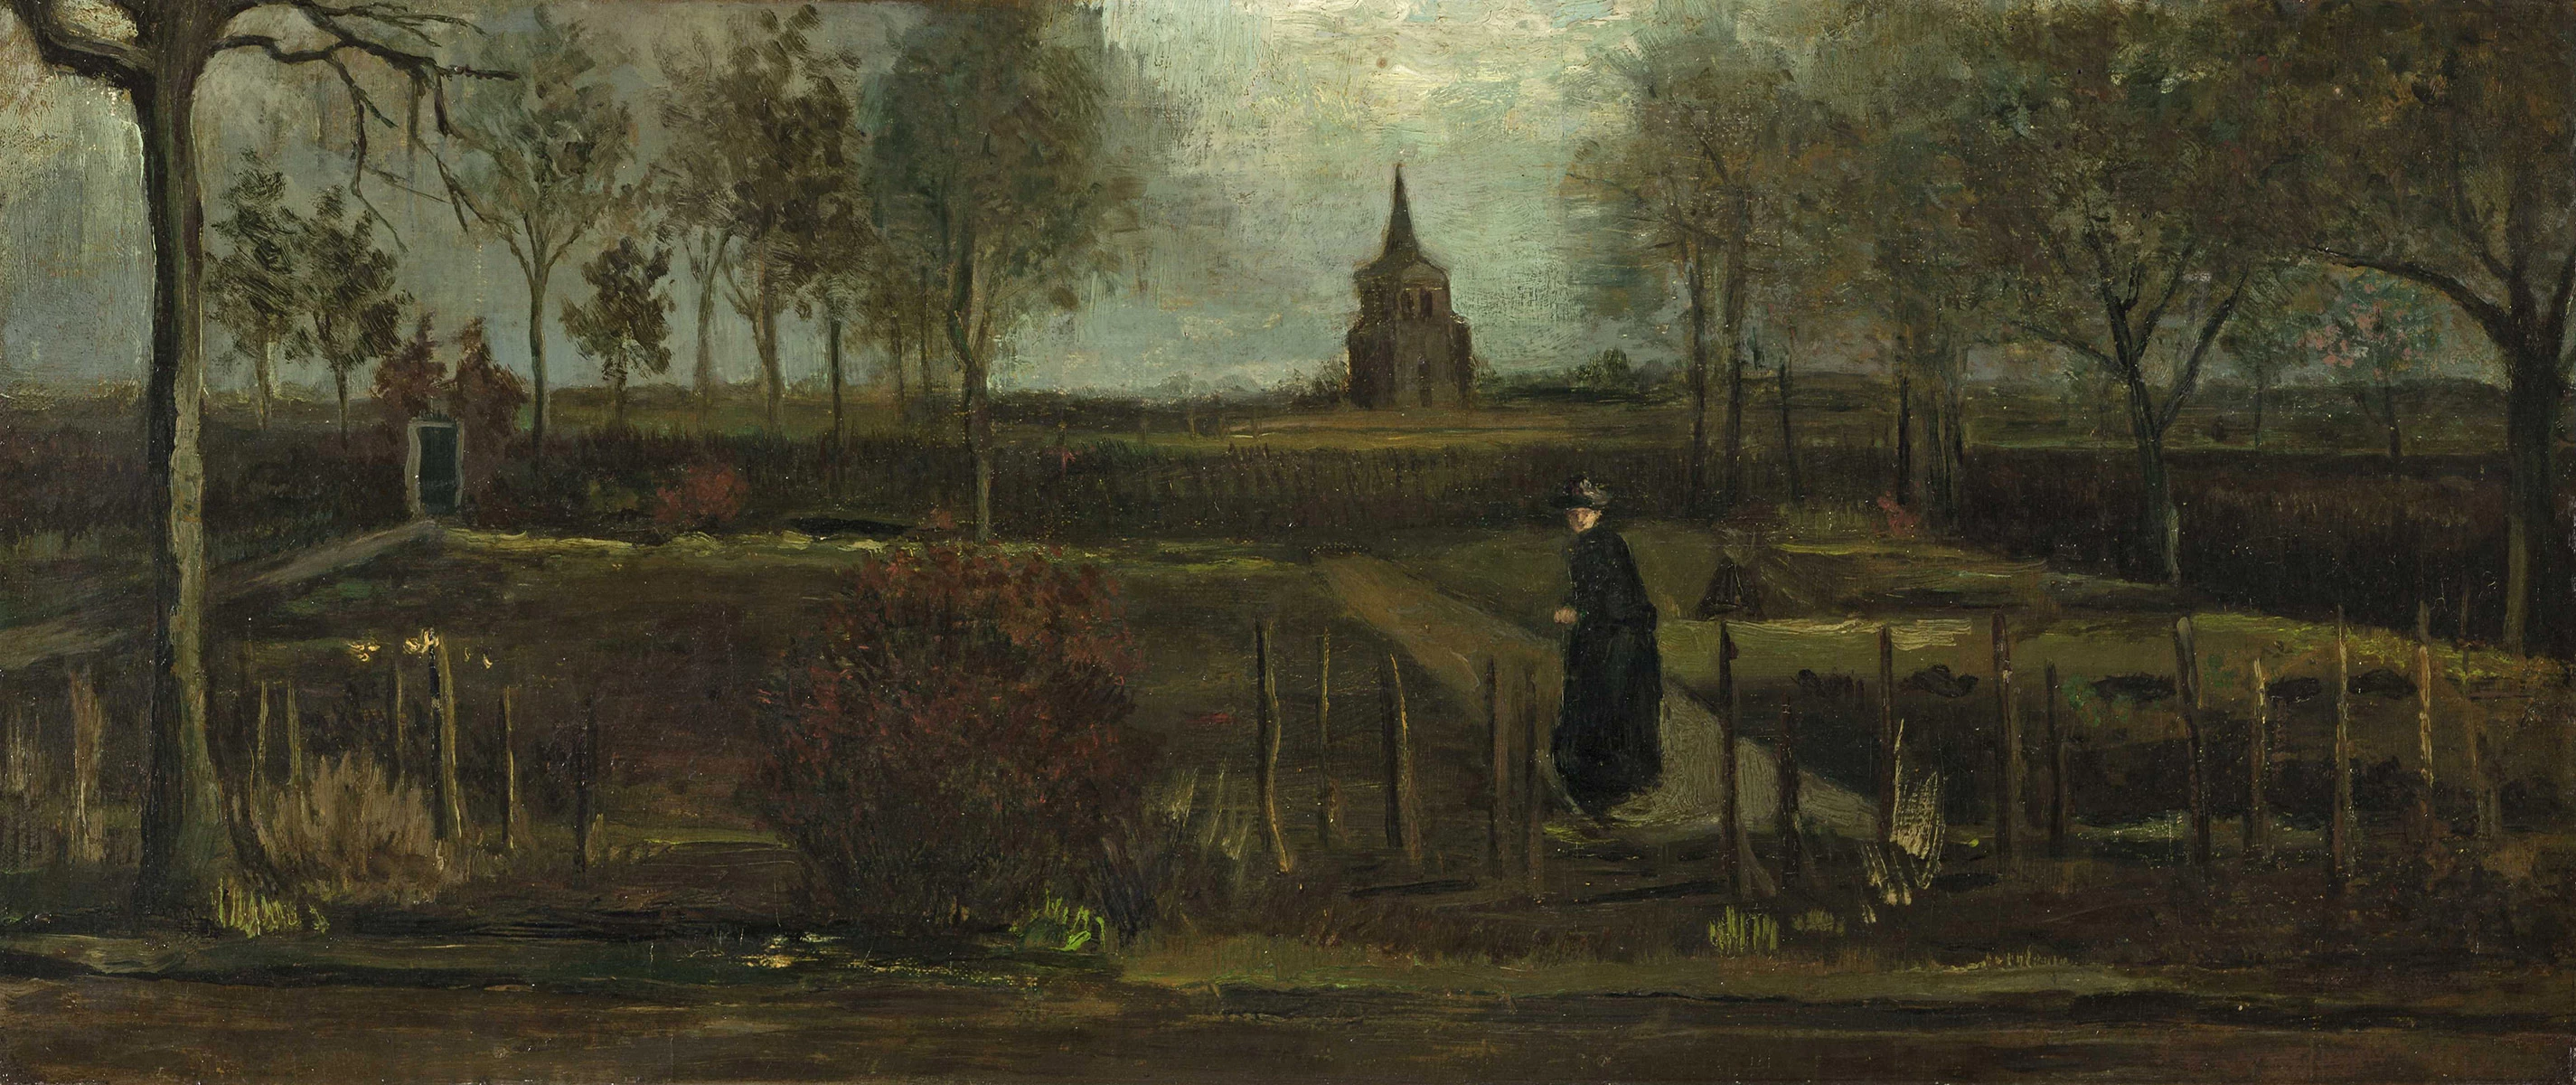 <p>Картина Винсента Ван Гога &laquo;Сад священника в Нюэнене, весна&raquo;</p>

<p></p>